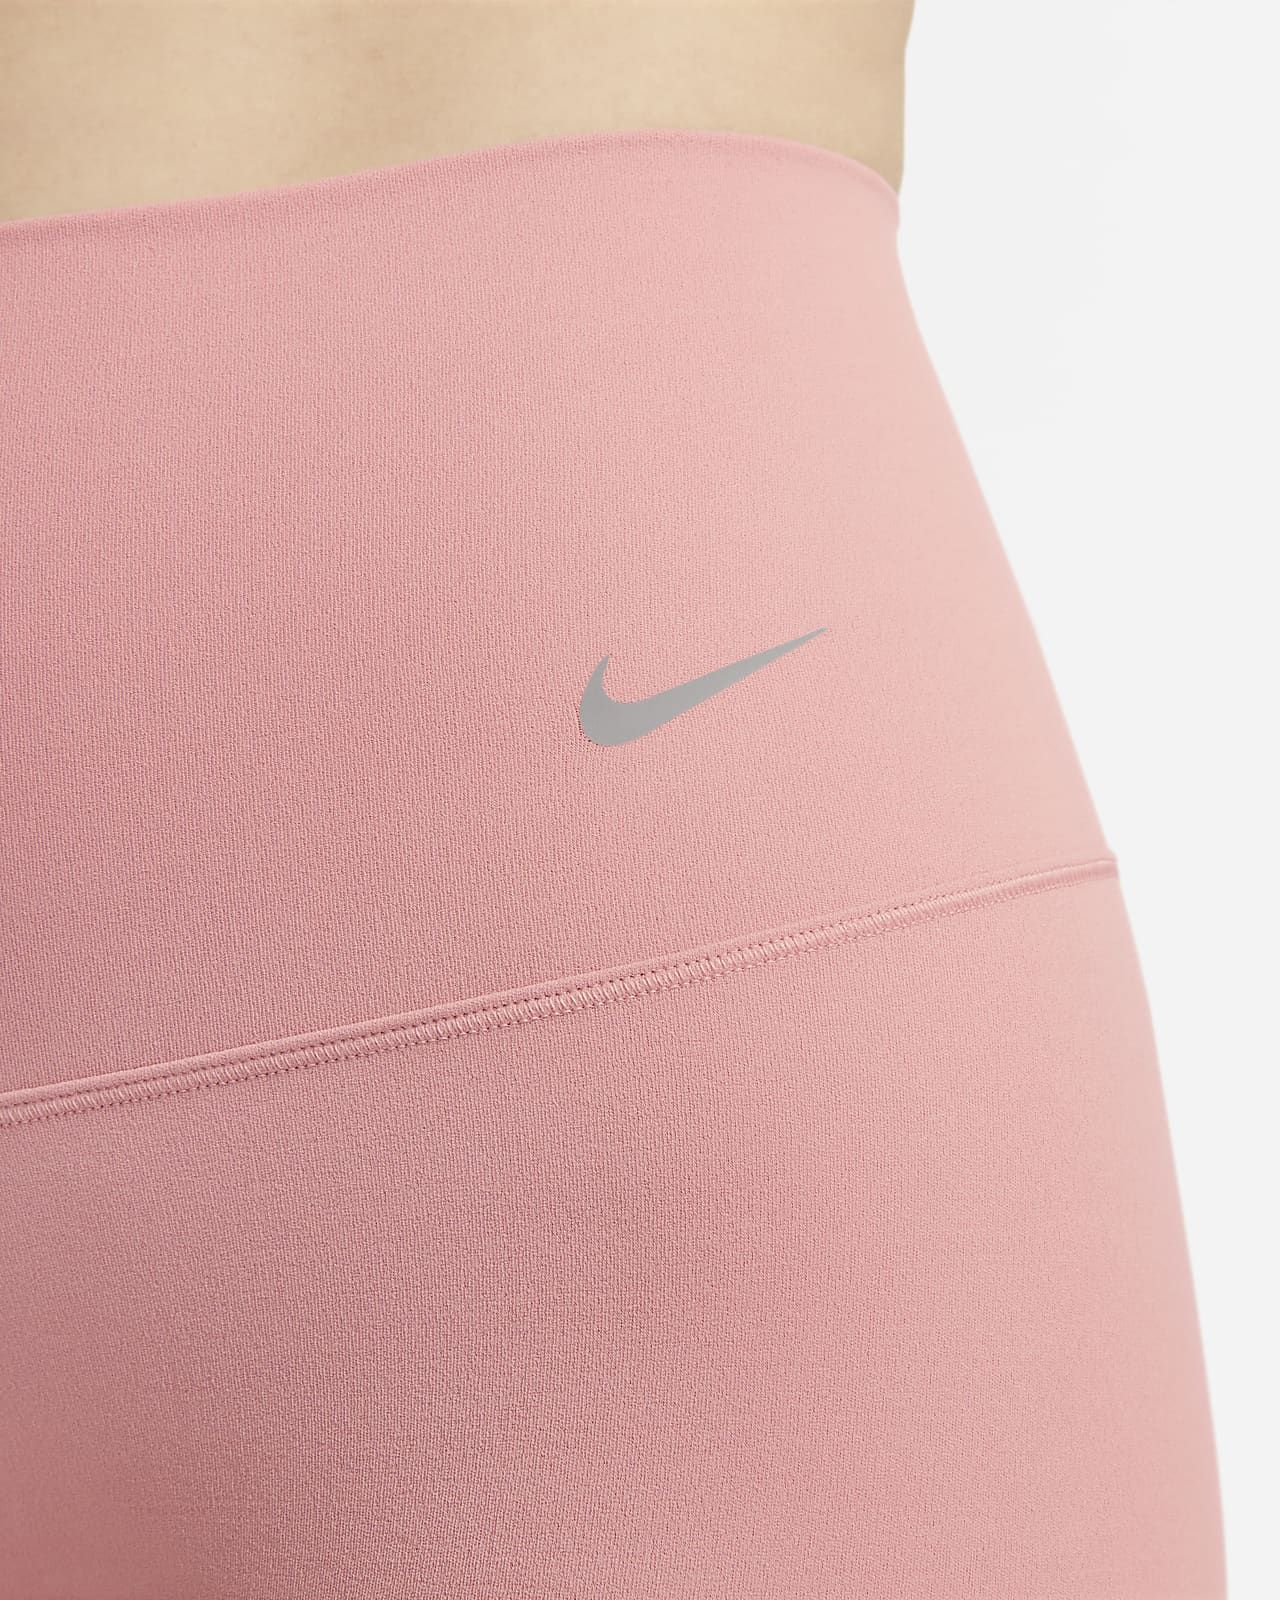 Nike Zenvy Women's Gentle-Support High-Waisted 7/8 Leggings. Nike.com | Nike (US)